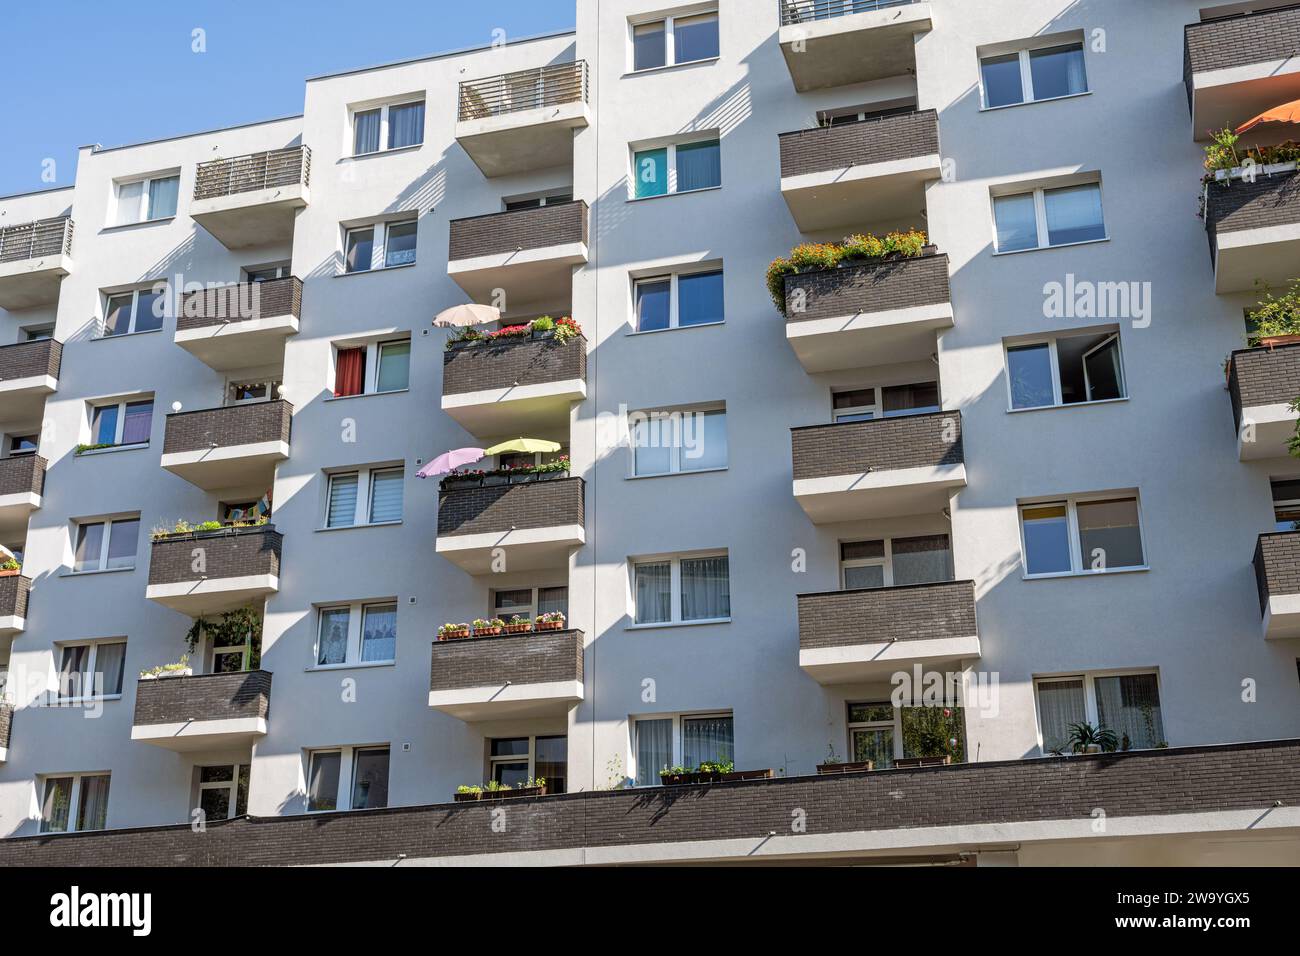 A social housing building seen in Berlin, Germany Stock Photo